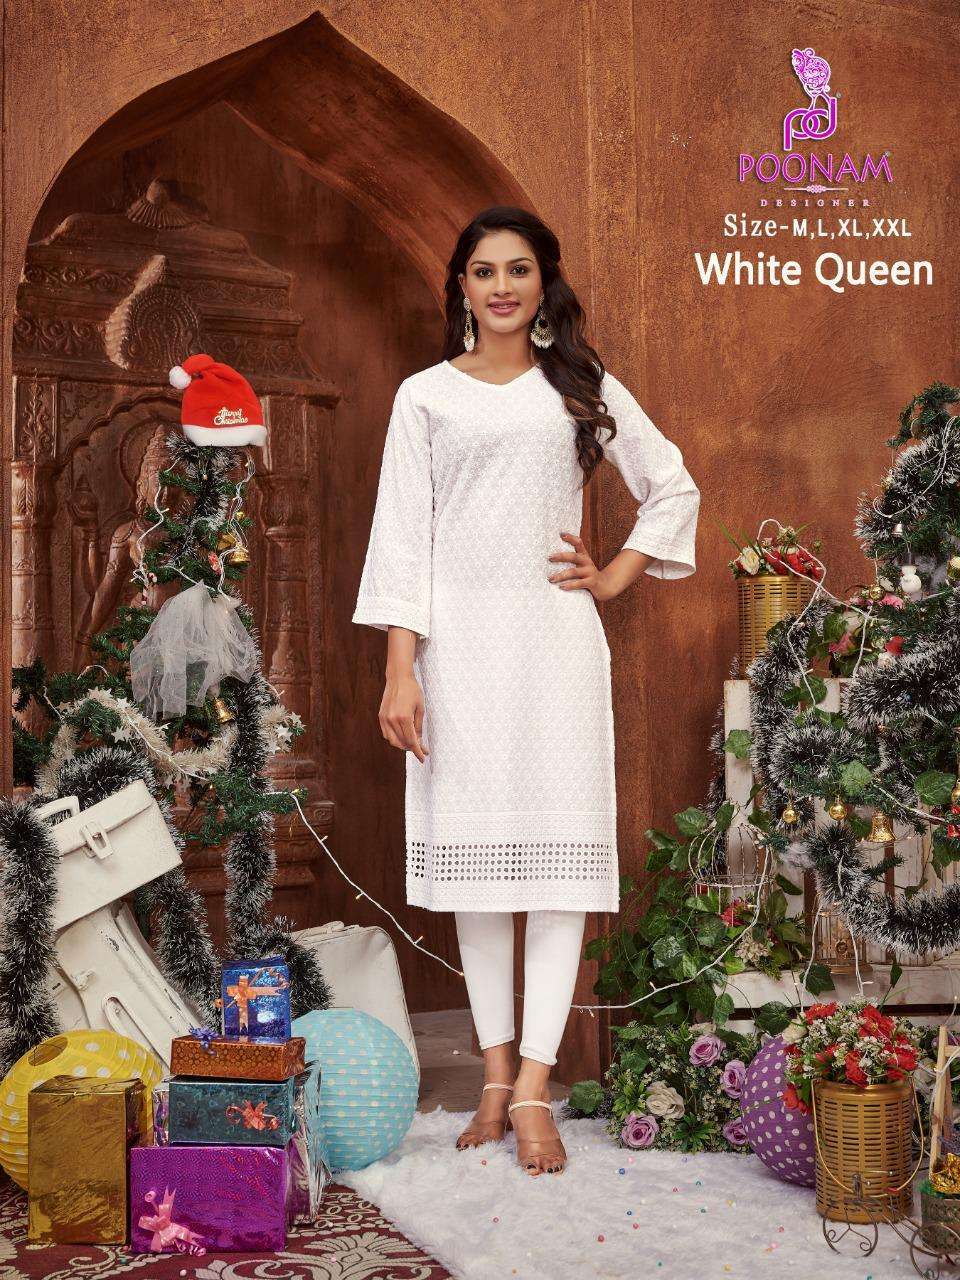 poonam designer white queen series 1001-1006 rayon kurti 